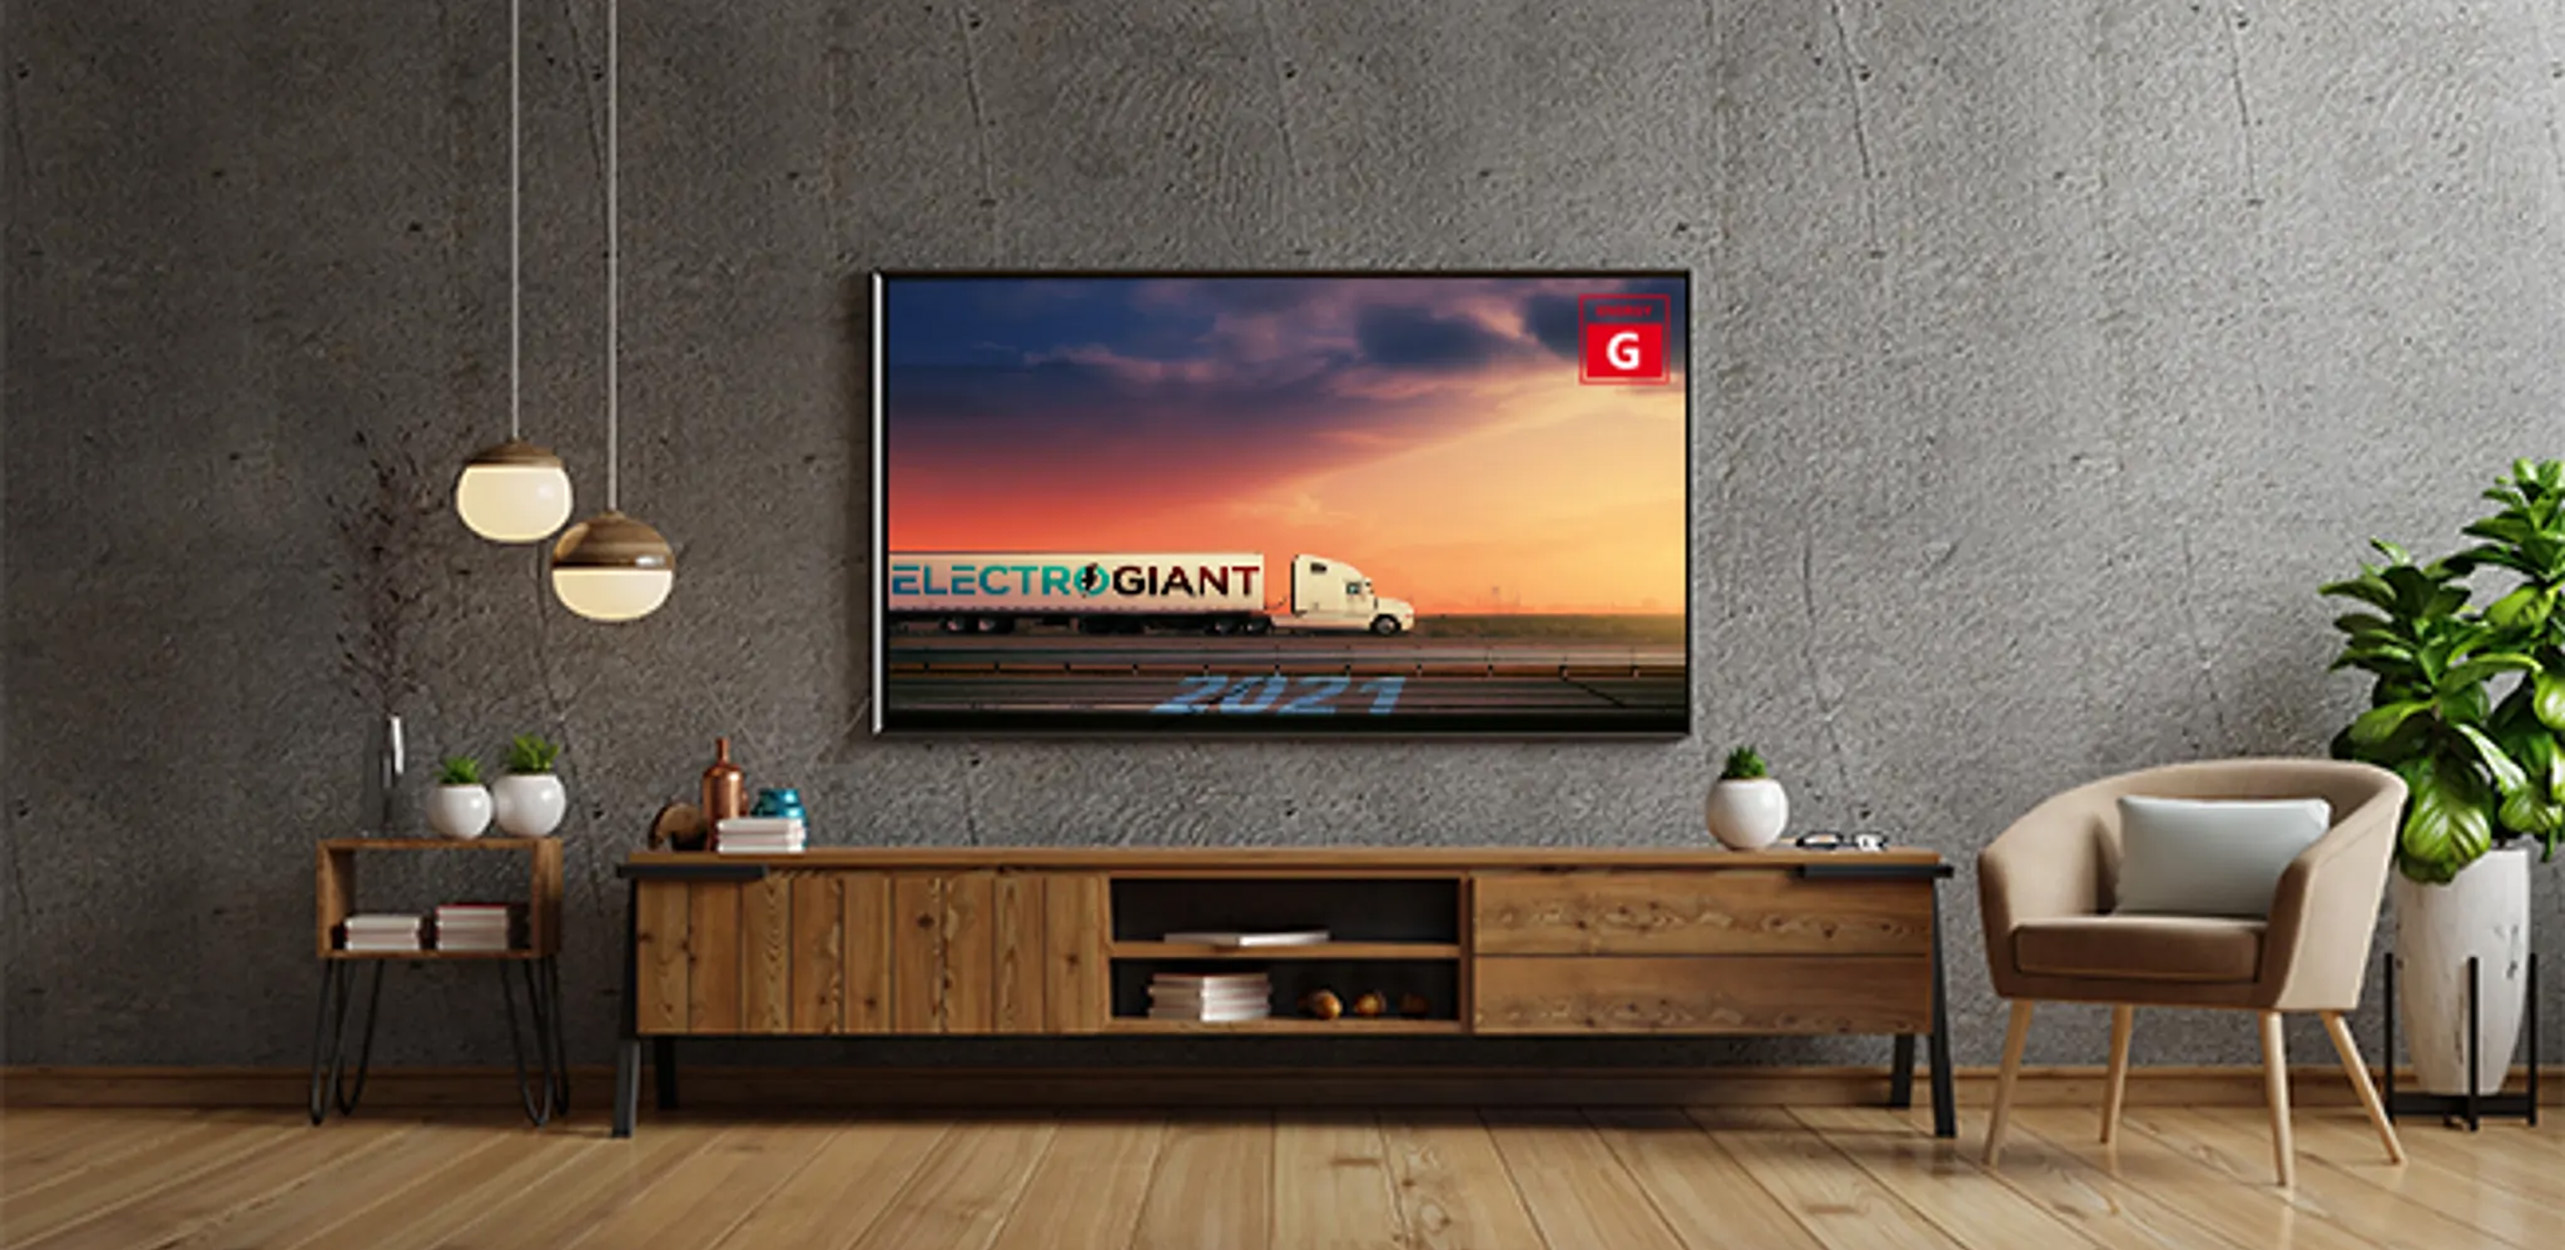 SAMSUNG GU50AU7179U LCD TV (Flat, SMART 4K, 125 UHD cm, / Zoll TV) 50